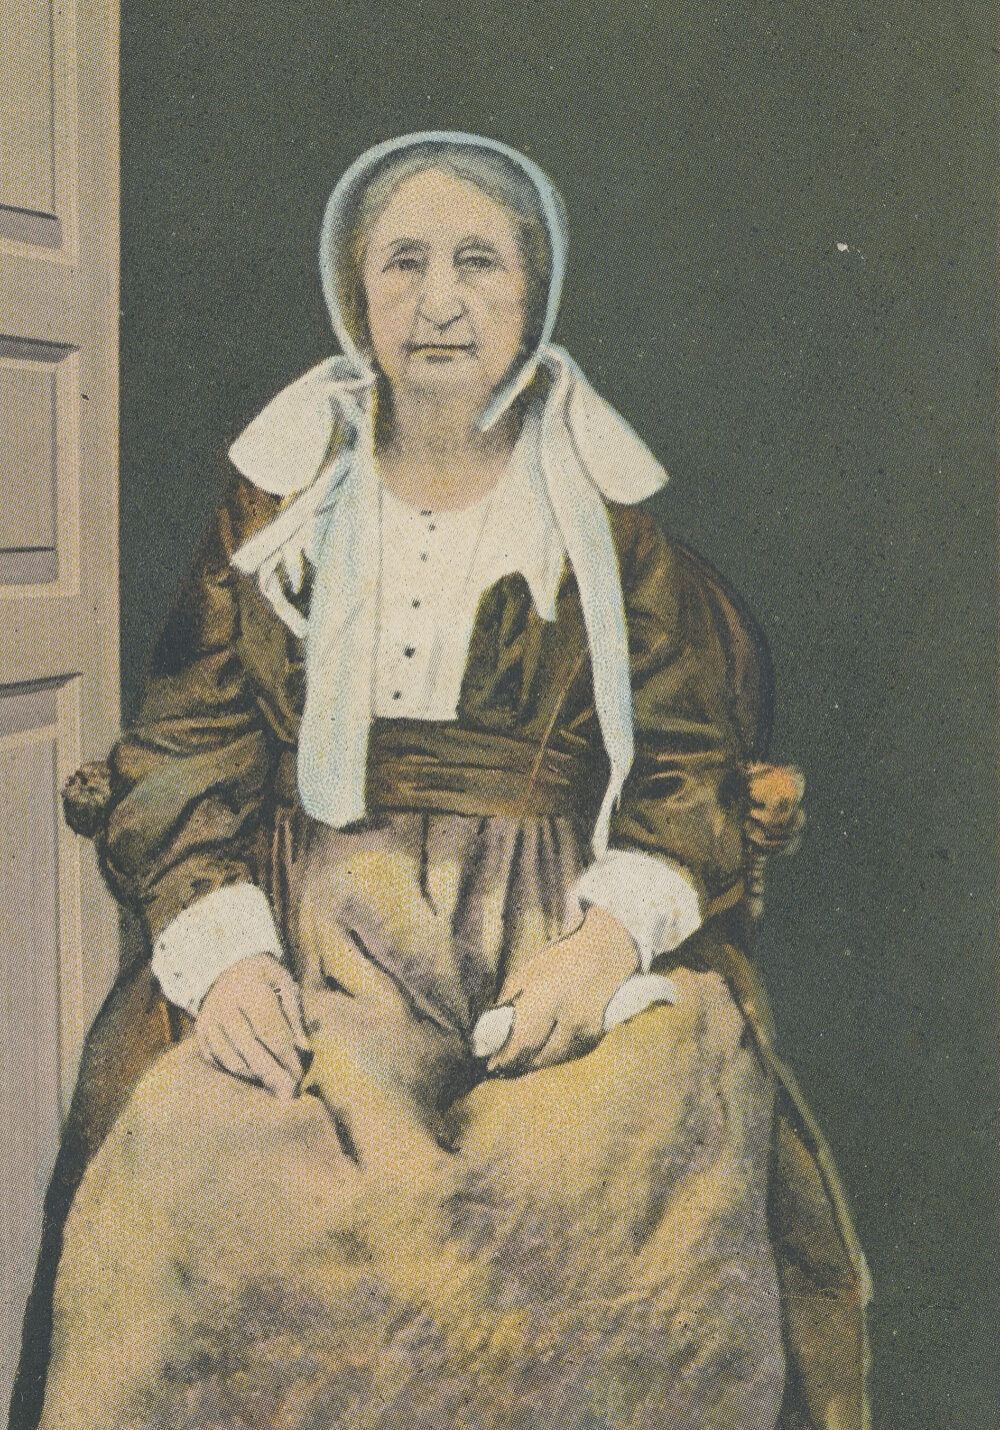 Sister Mary Settles